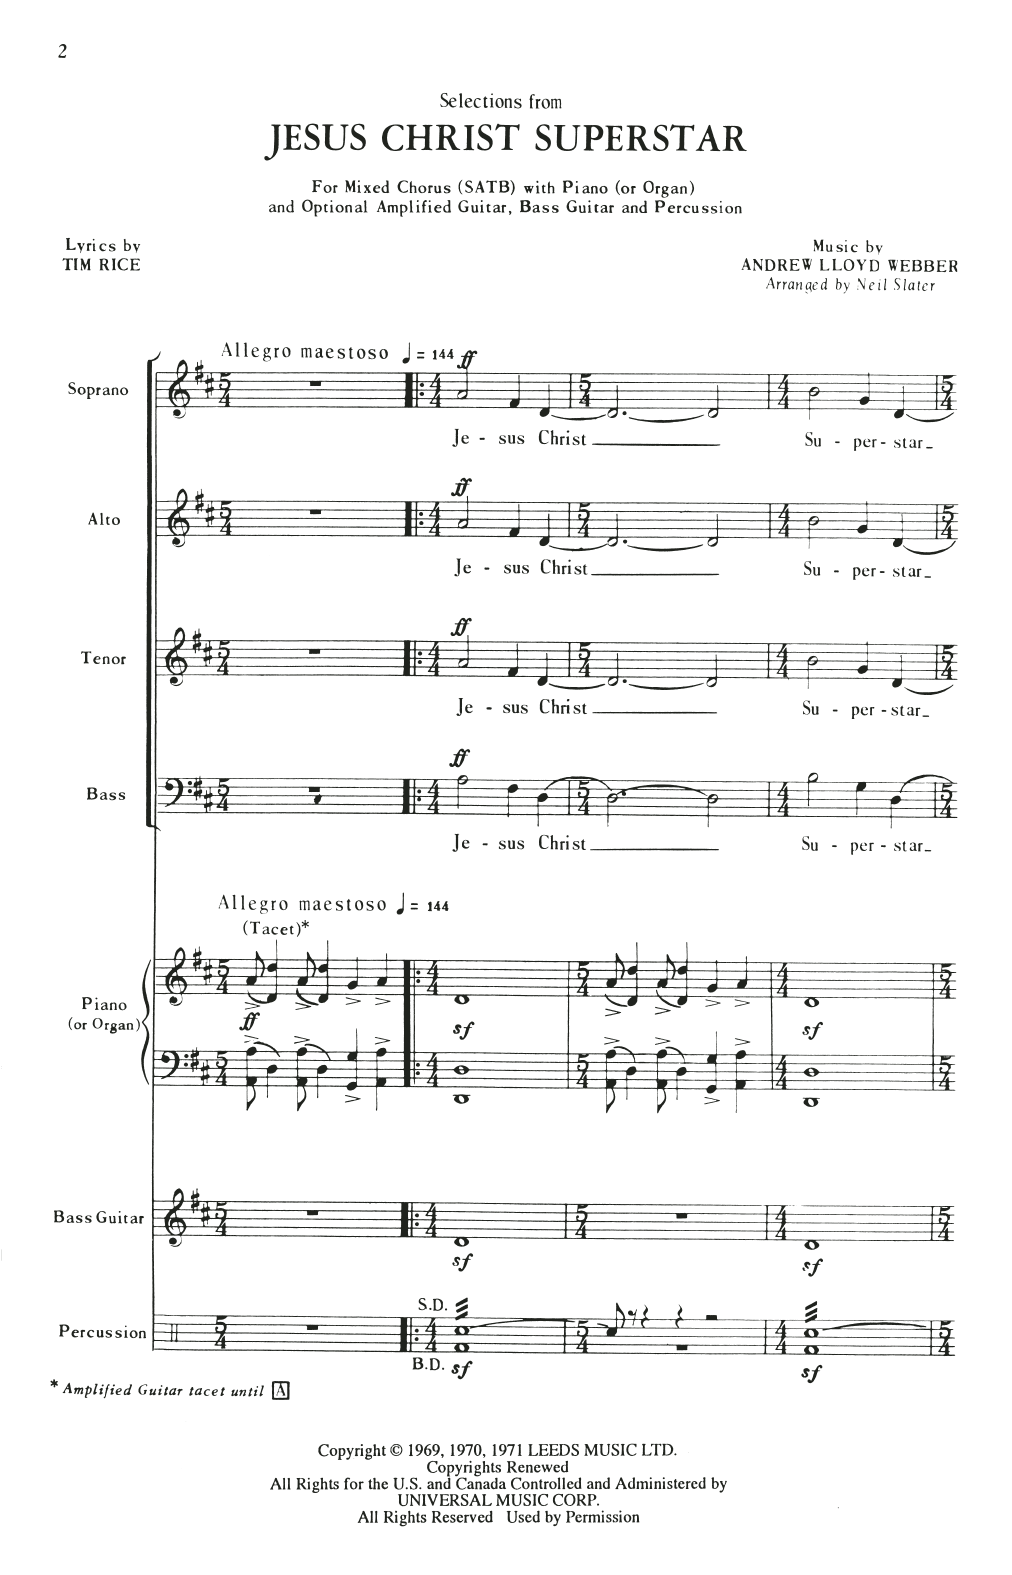 Andrew Lloyd Webber Selections from Jesus Christ Superstar (arr. Neil Slater) Sheet Music Notes & Chords for SATB Choir - Download or Print PDF